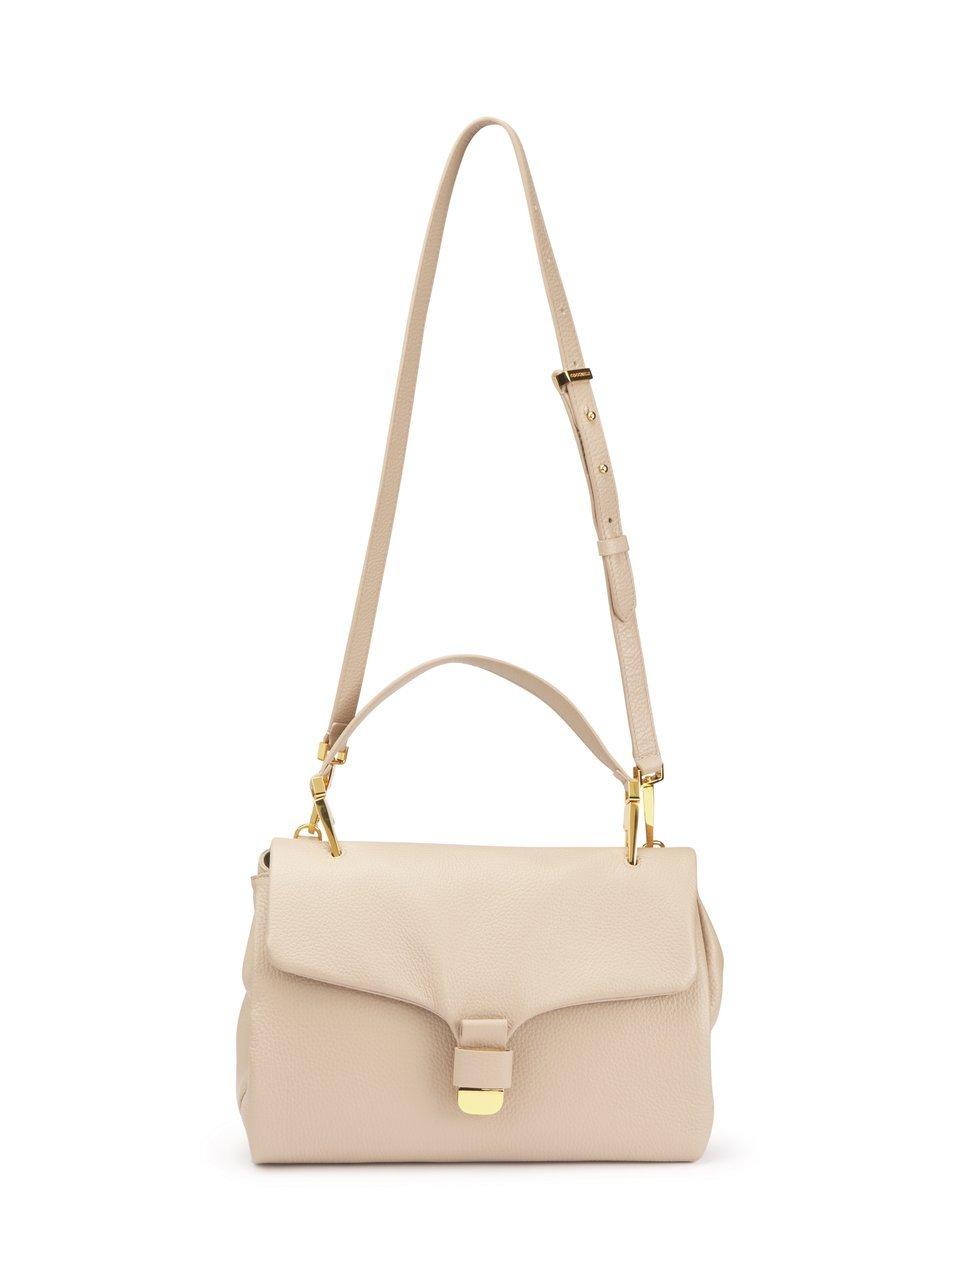 Image of Handbag Coccinelle pale pink